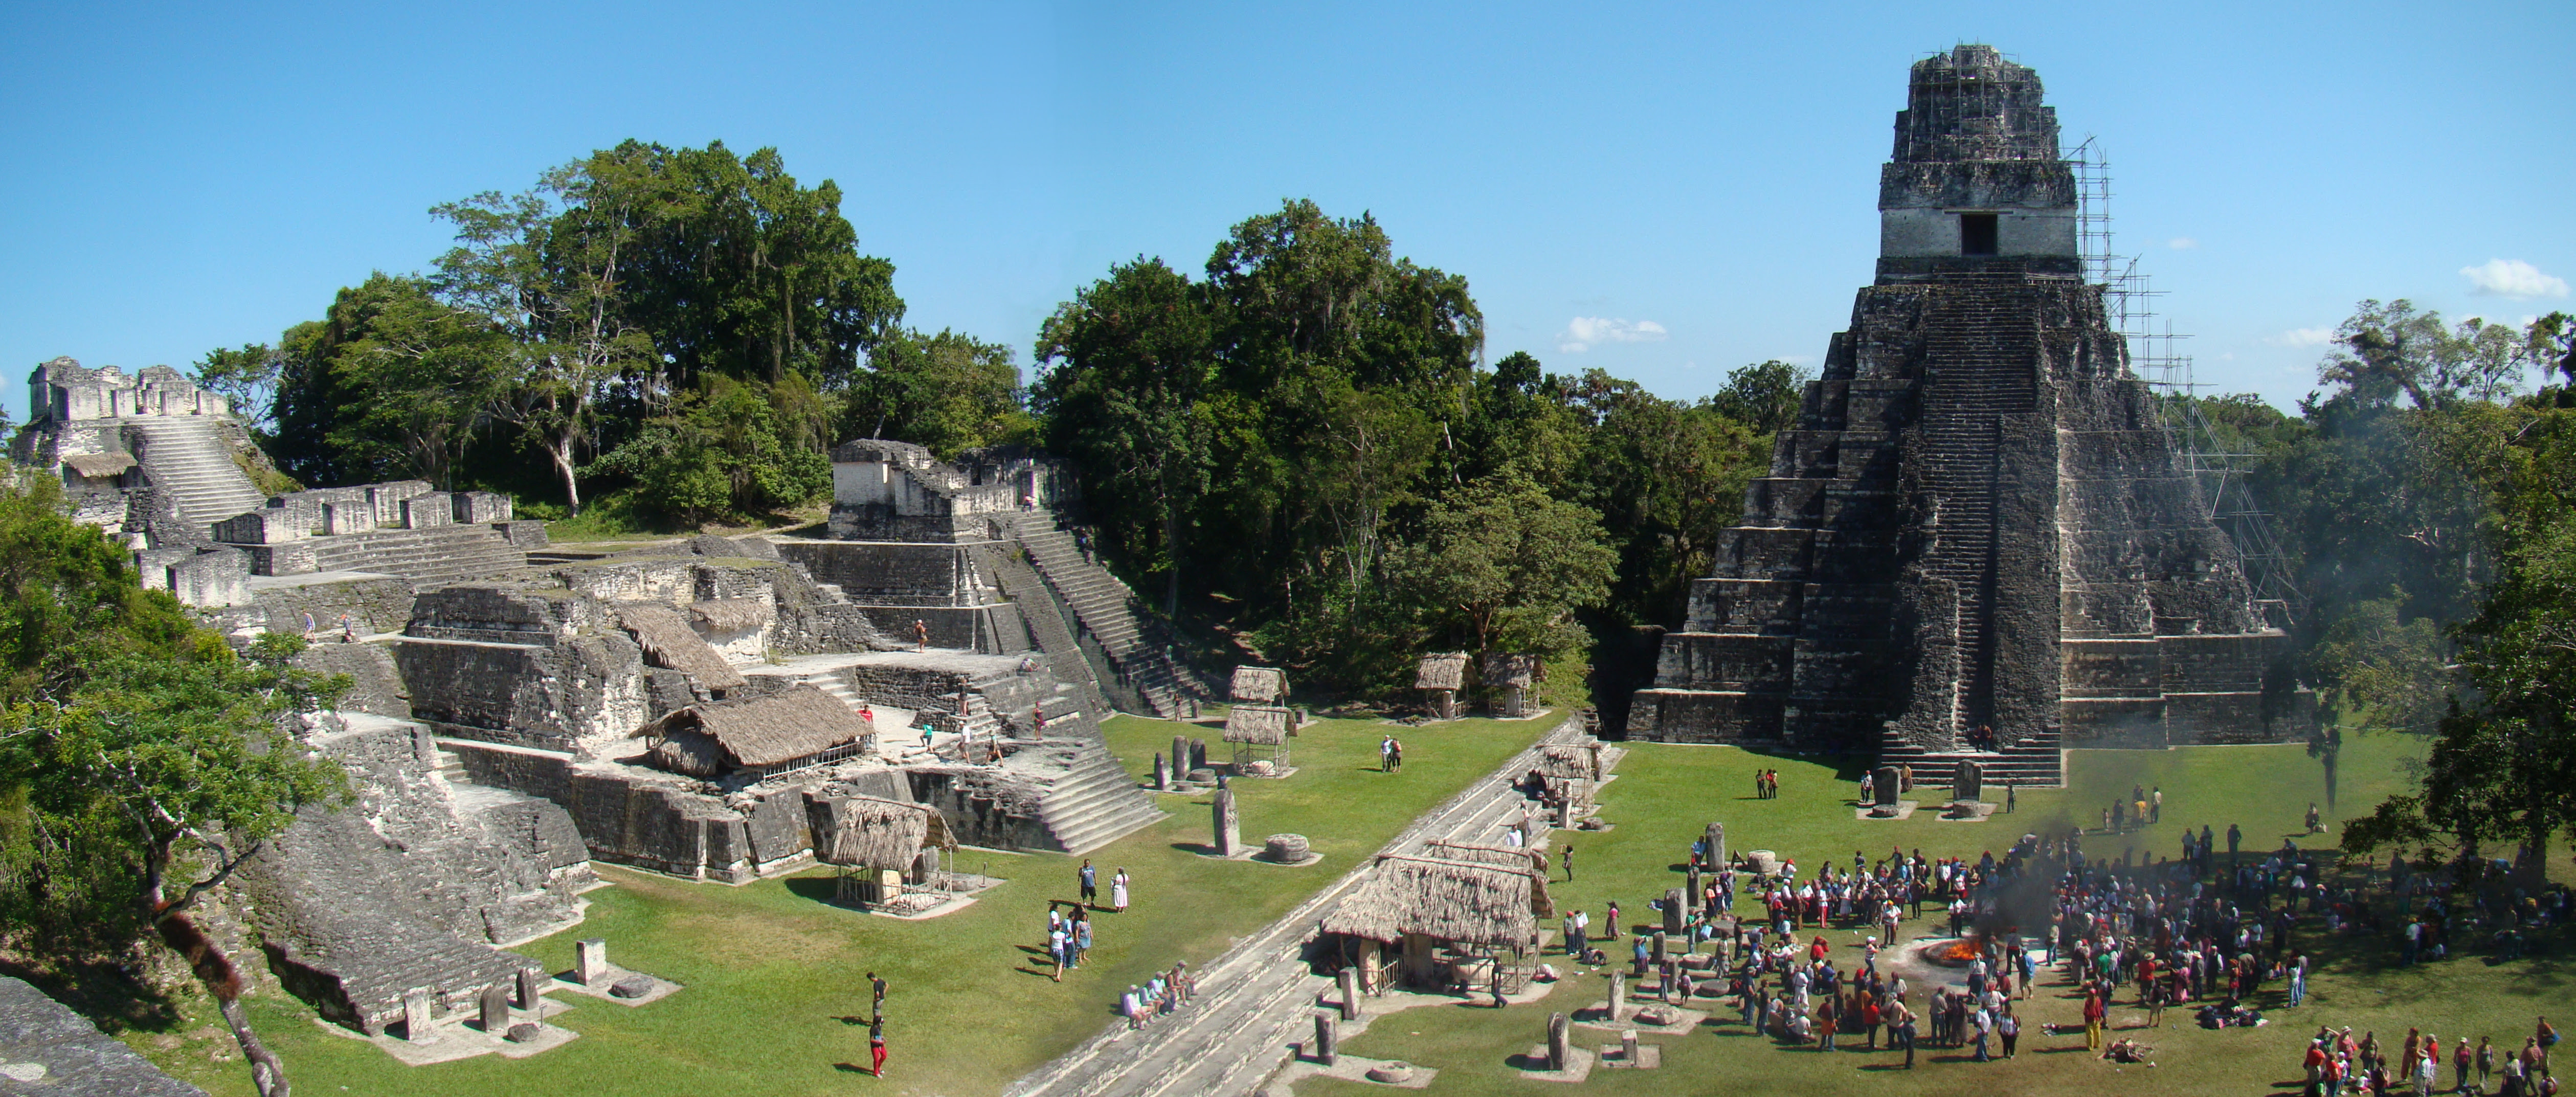 Donde Esta La Piramide De Tikal